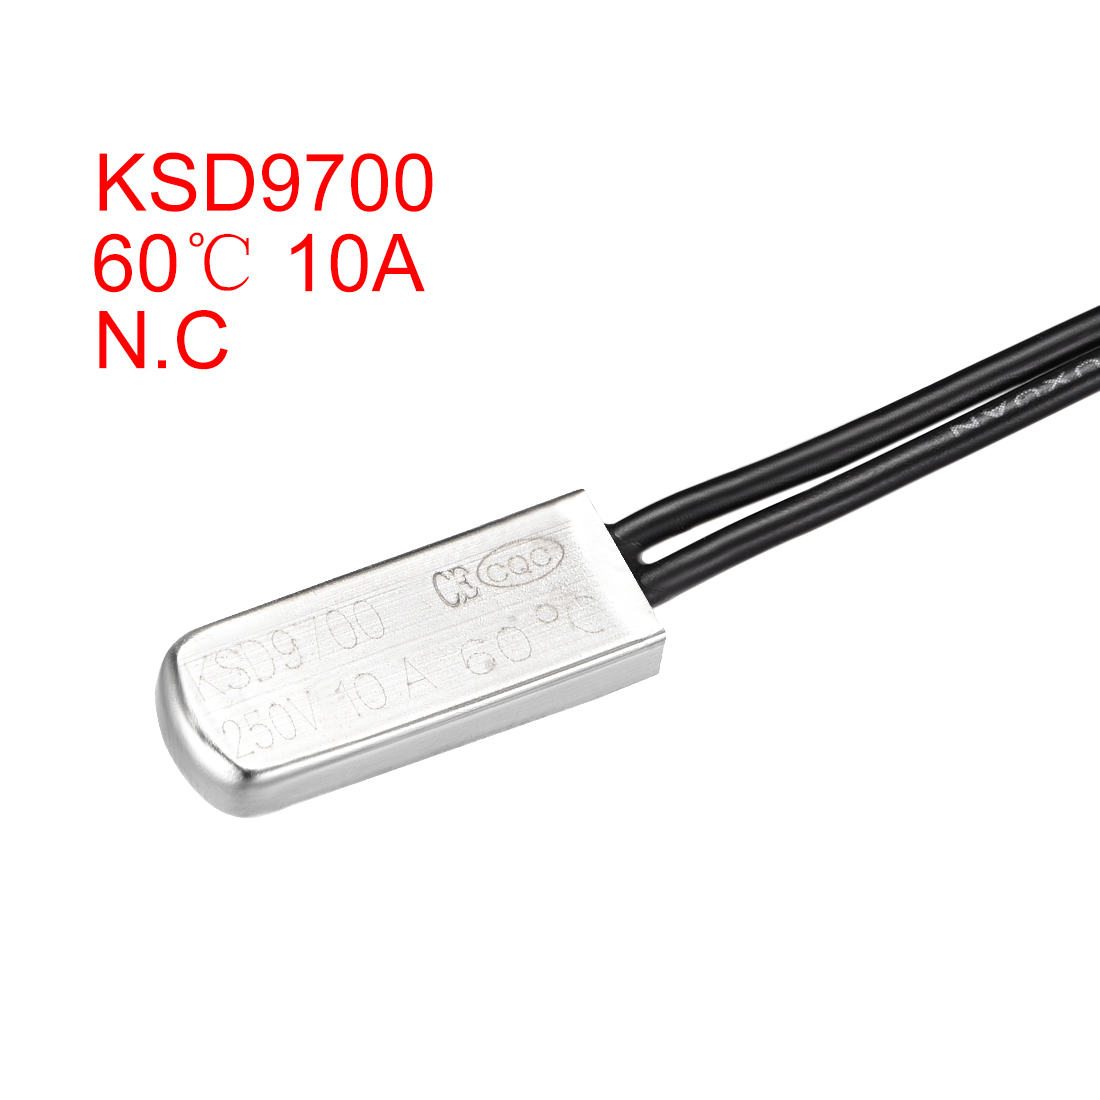 Unique Bargains KSD9700 Thermostat, 60℃ N.C 10A Metal Temperature Control Switch Controller 2pcs